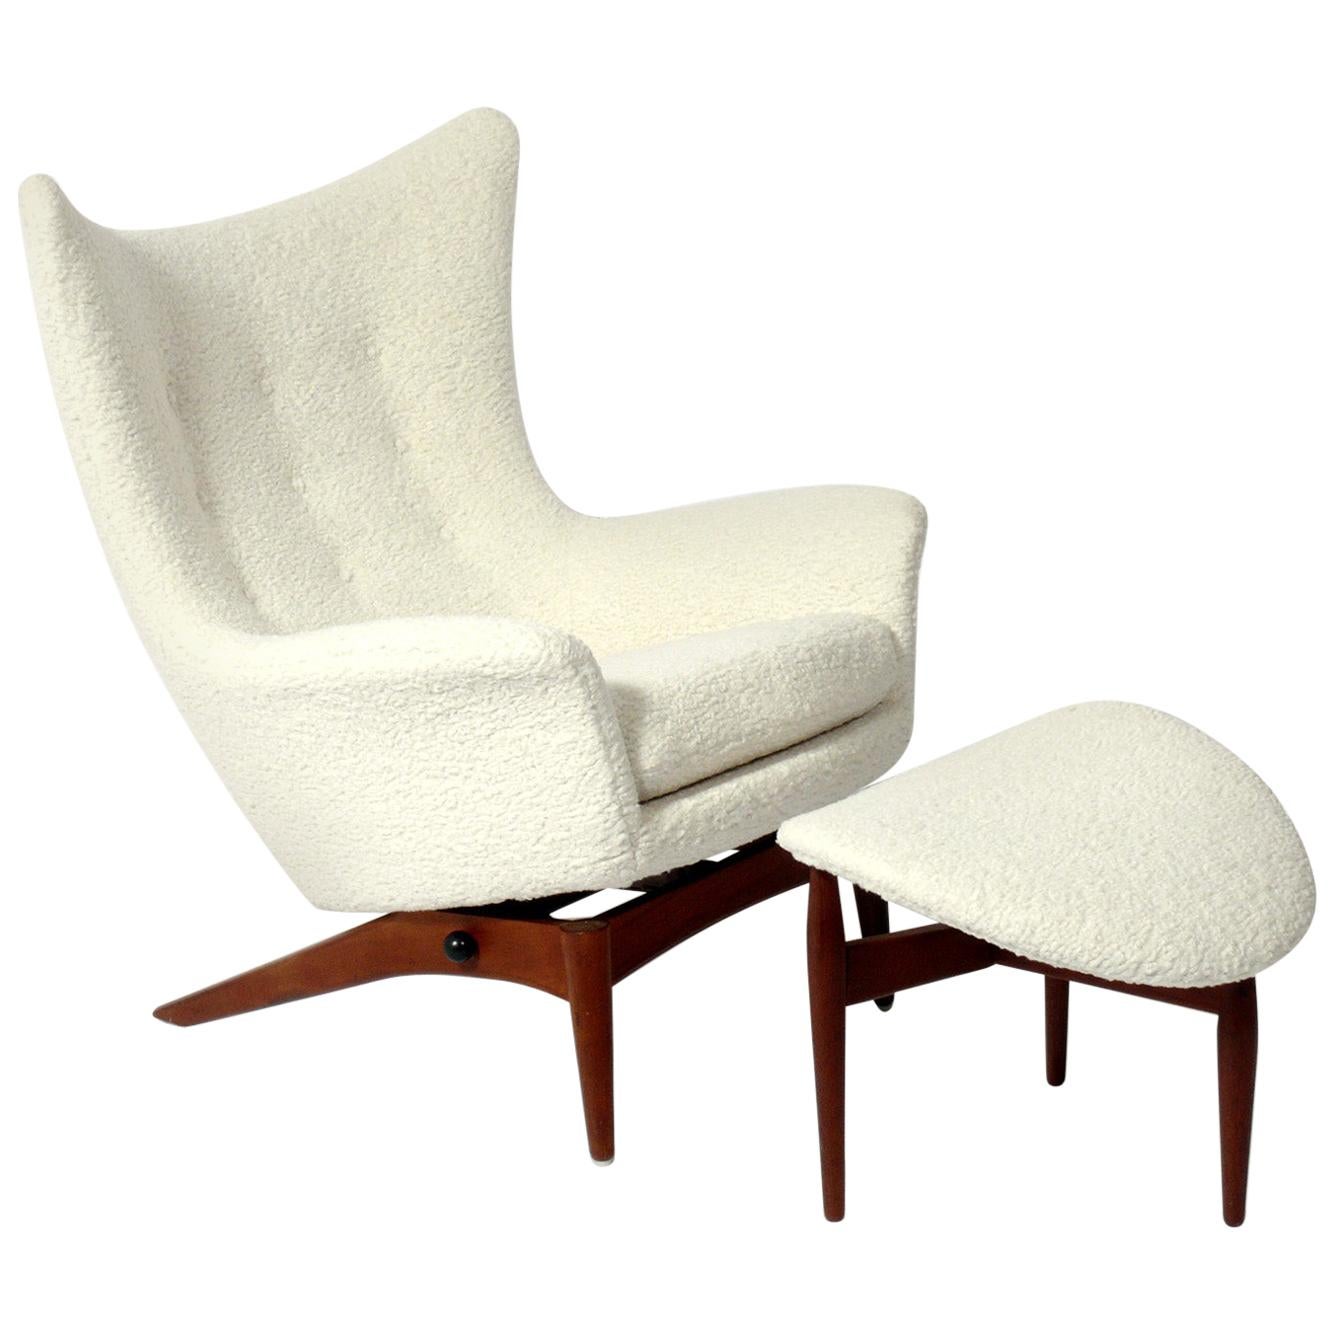 Sculptural Danish Modern Lounge Chair and Ottoman by H.W. Klein